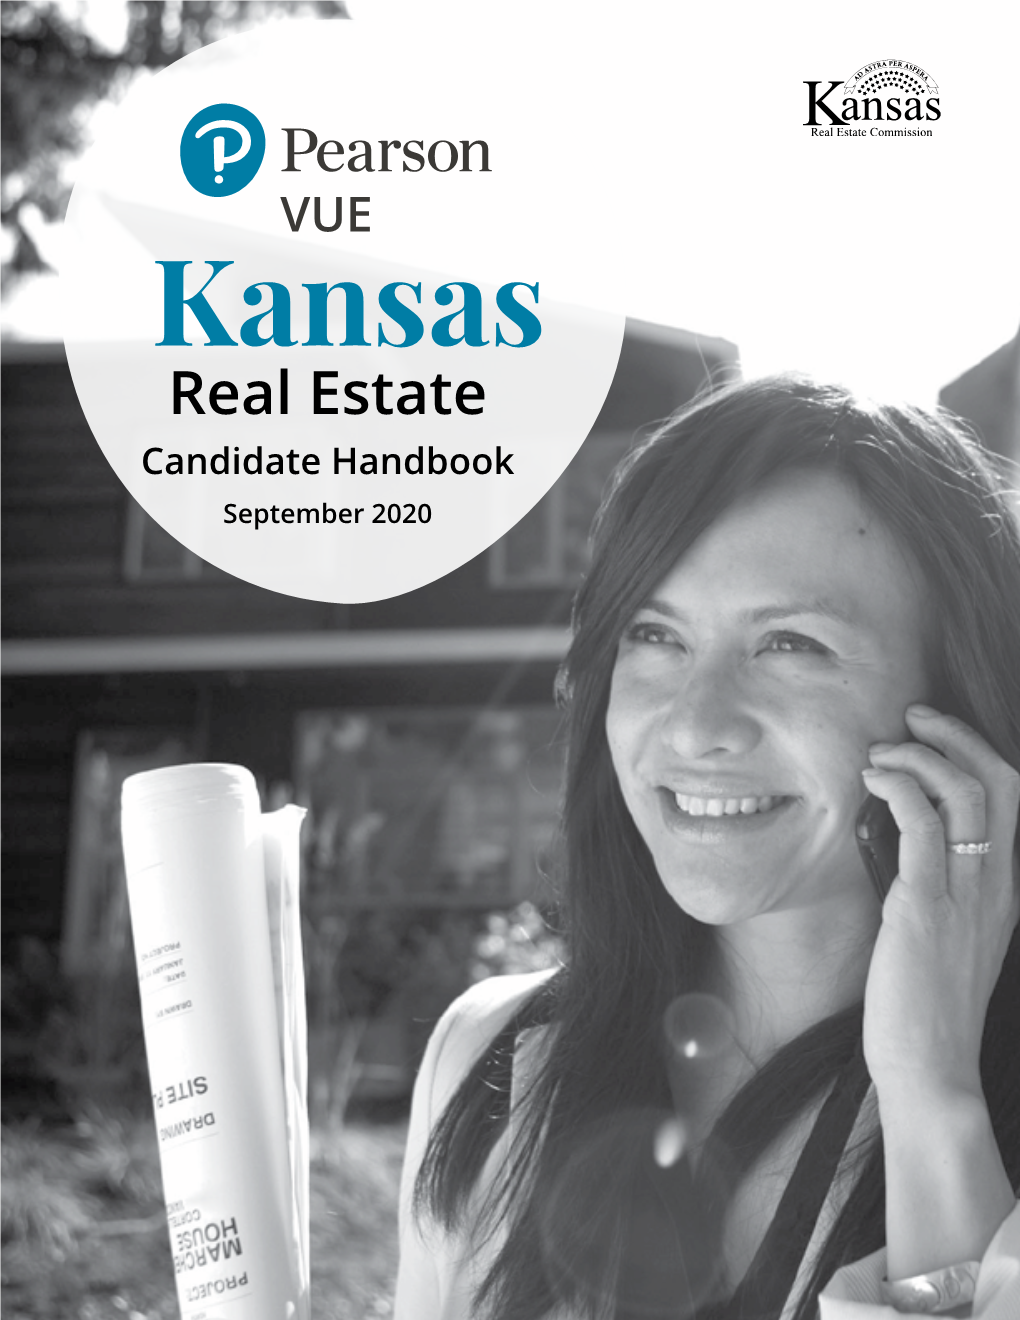 Kansas Real Estate Candidate Handbook September 2020 OVERVIEW